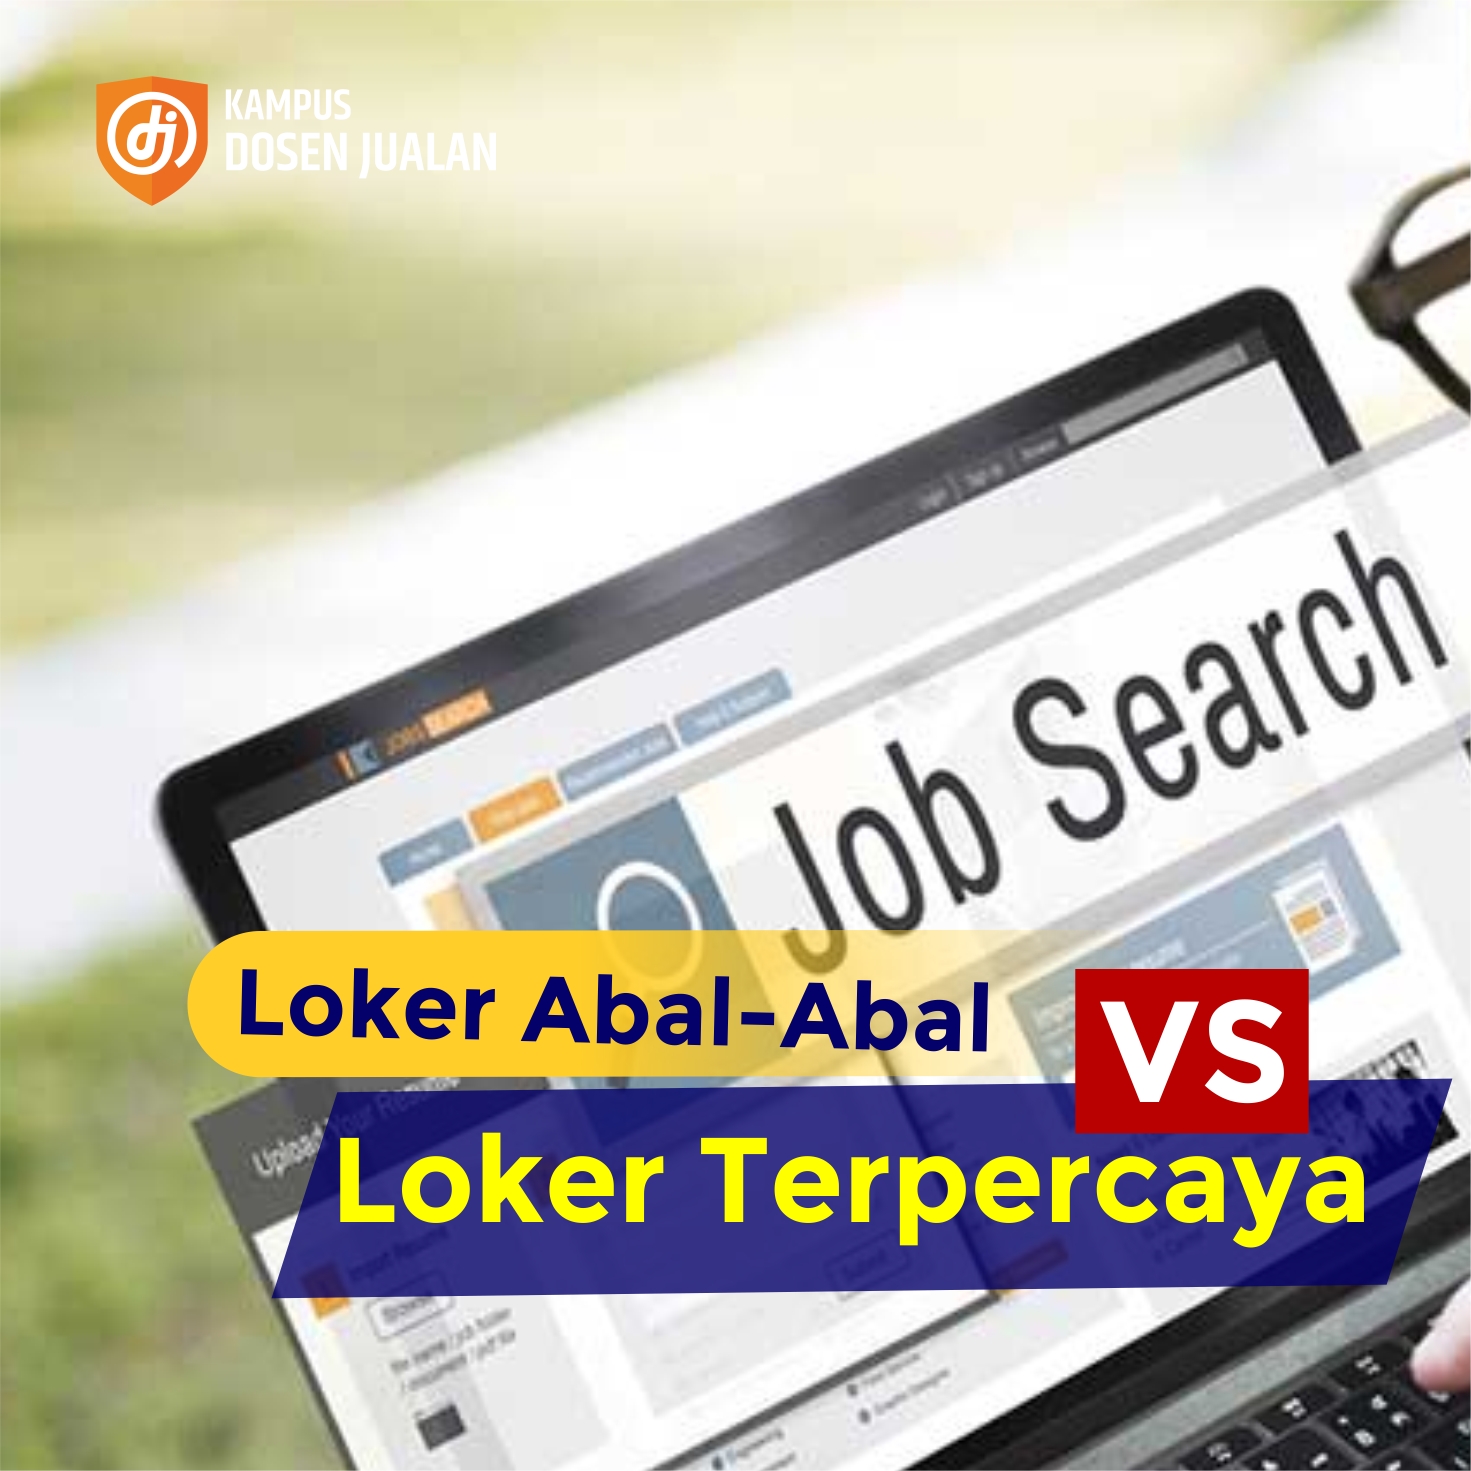 Lowongan Kerja Abal-abal vs Loker Terpercaya | Kampus ...